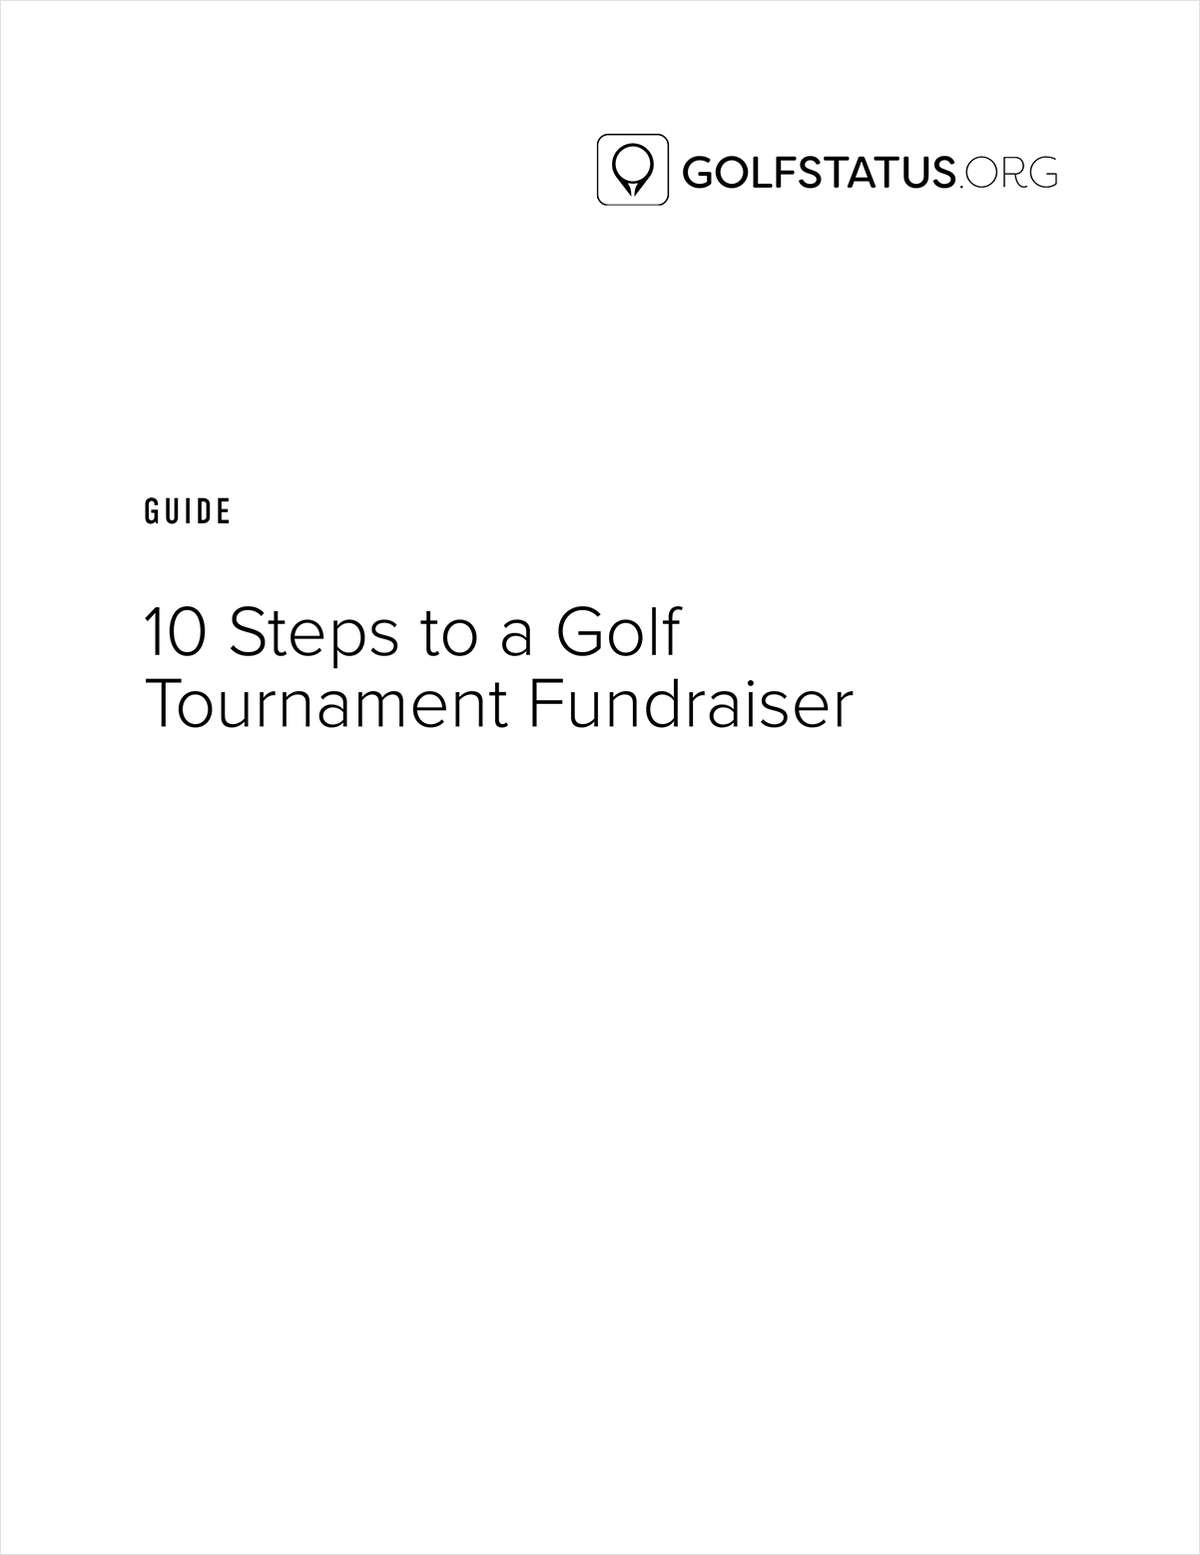 Guide: 10 Steps to a Golf Tournament Fundraiser